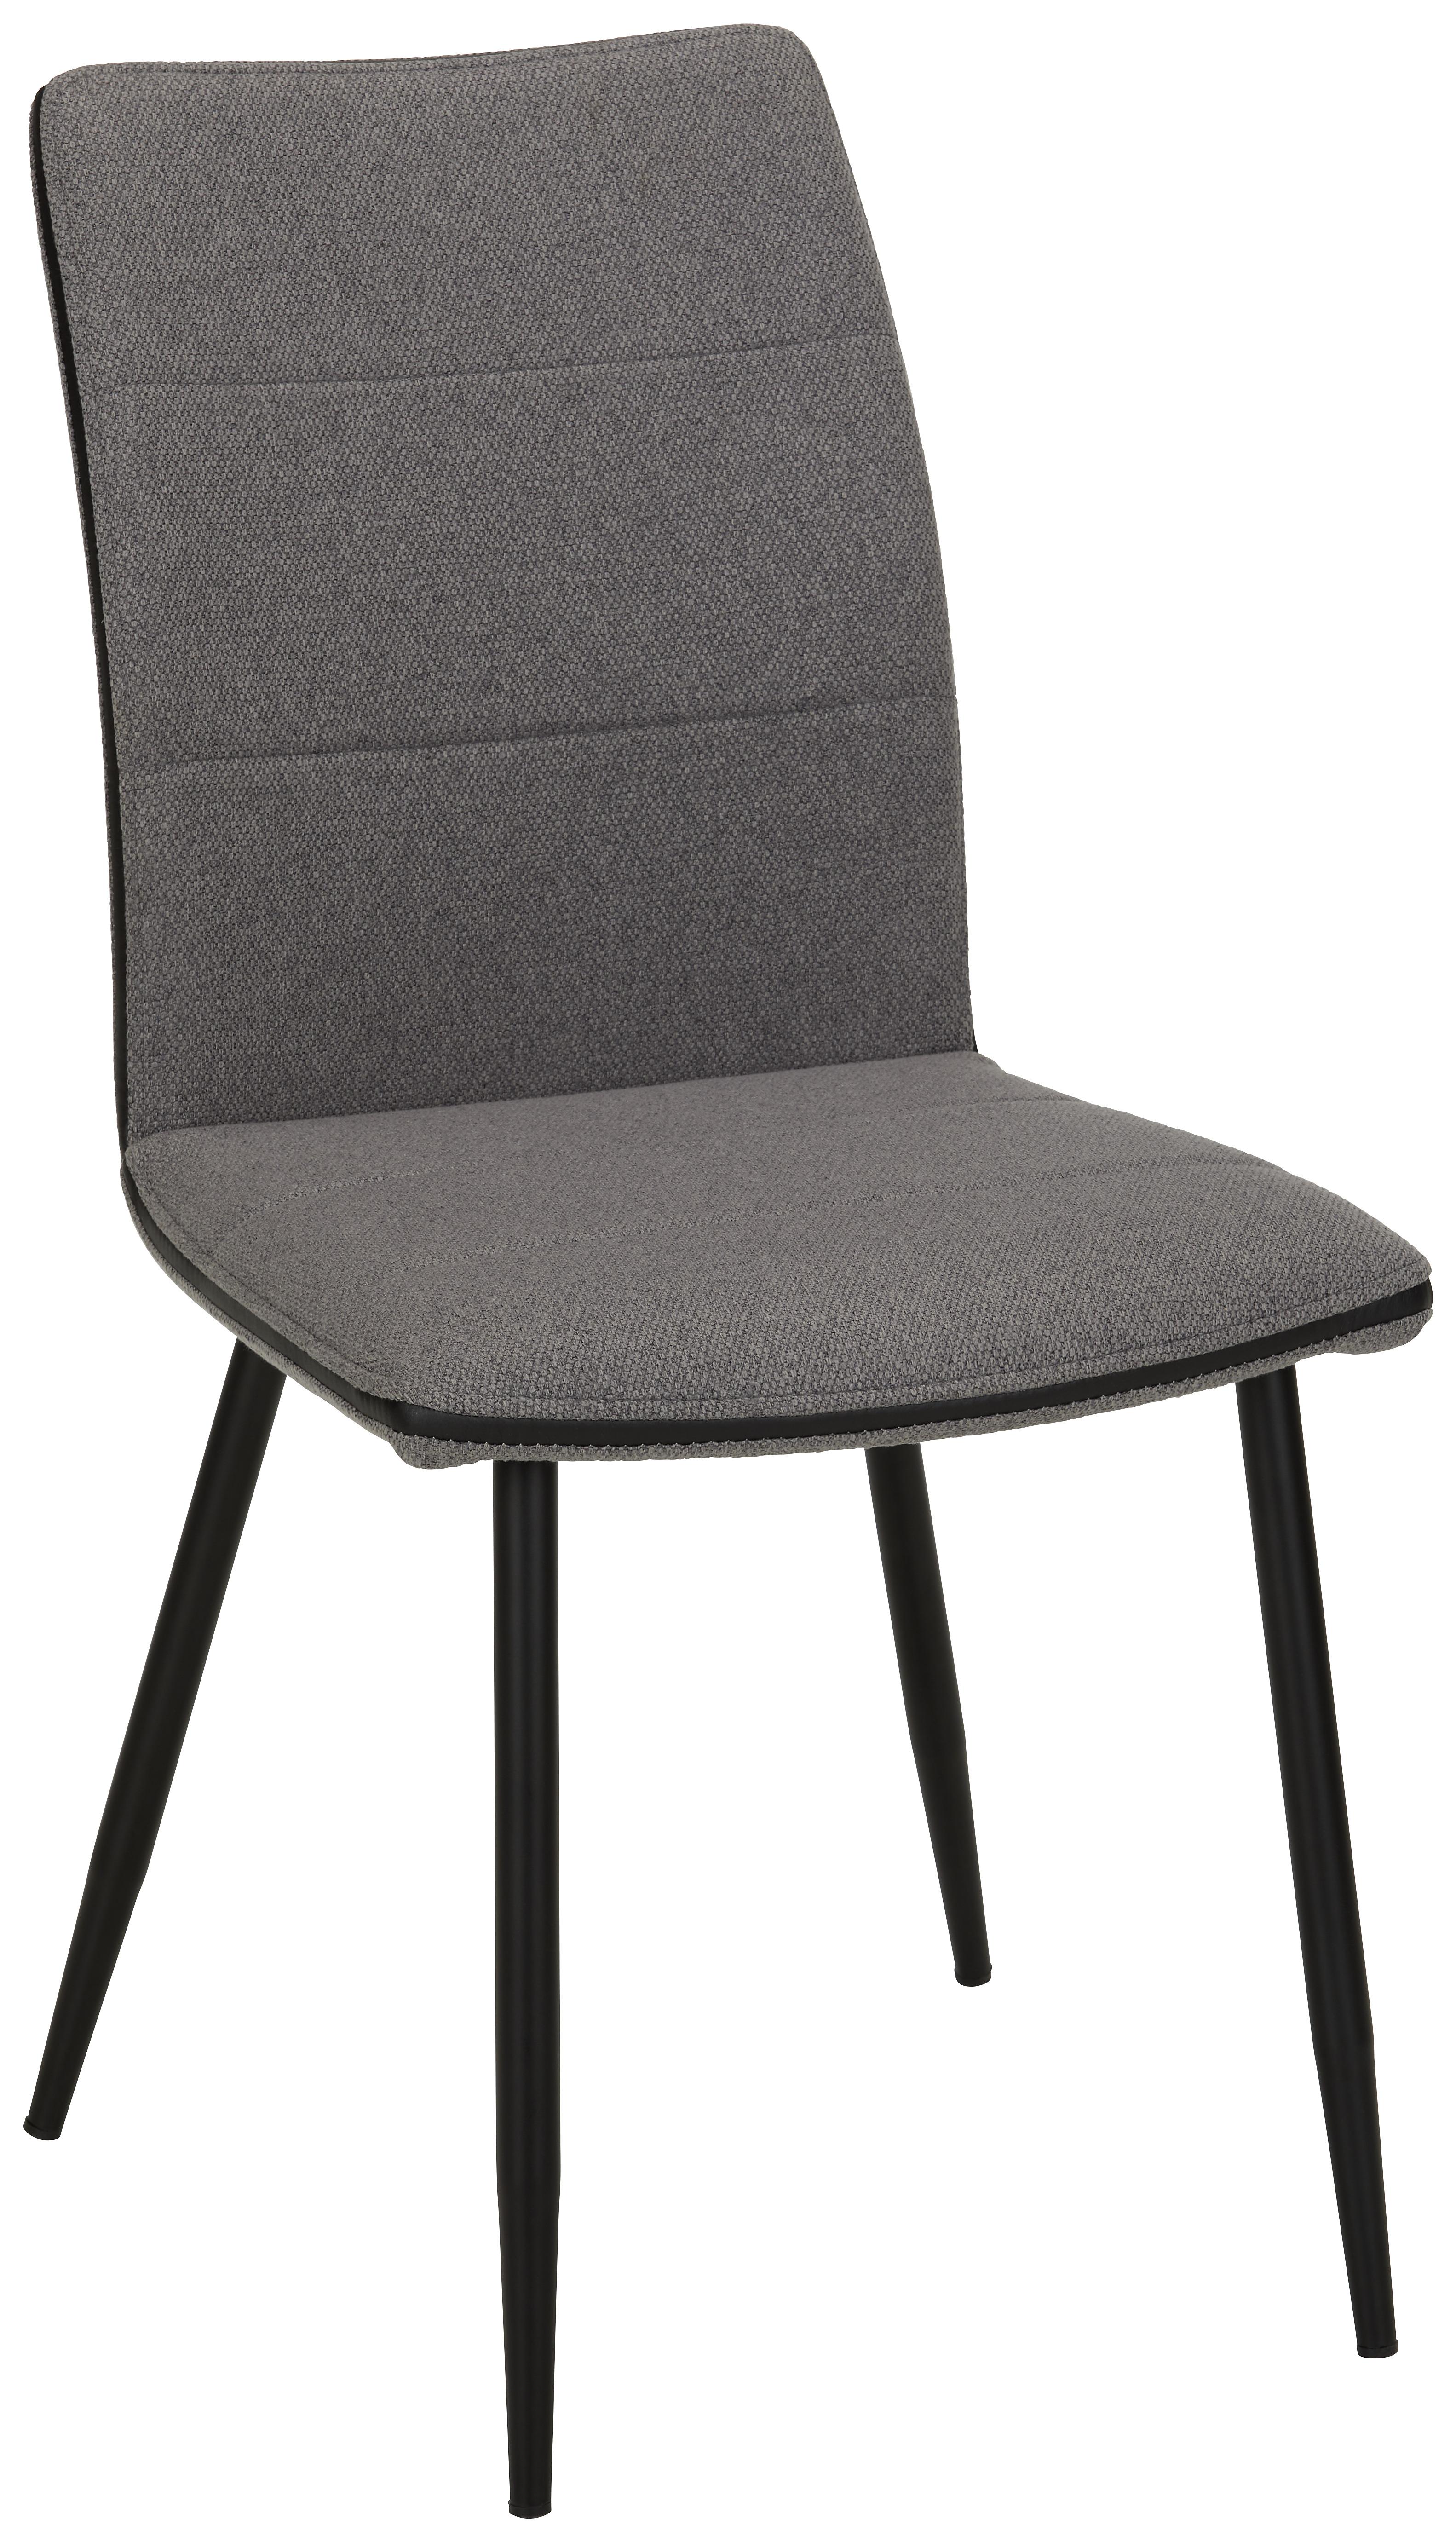 Stuhl in Grau - Schwarz/Grau, Modern, Textil/Metall (45/87/57cm) - Modern Living